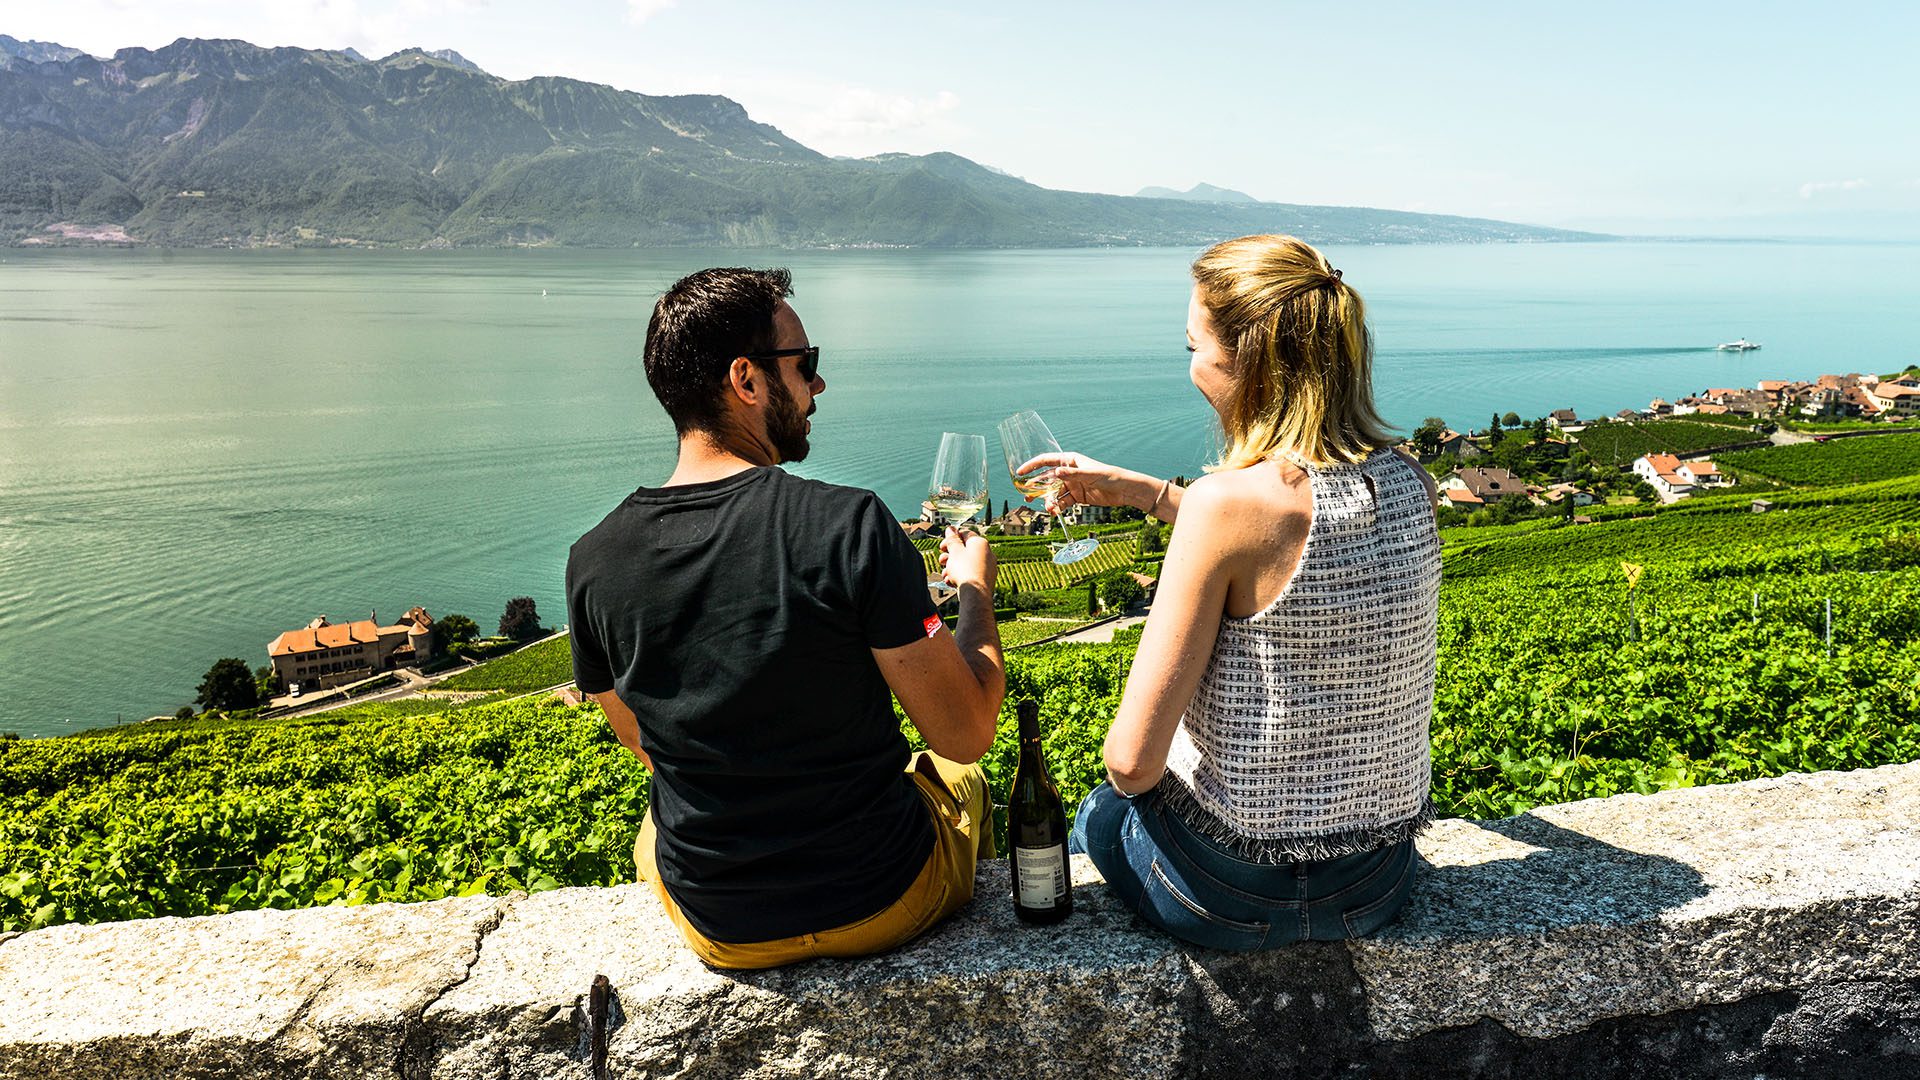 The famous wine terraces of Lavaux, a UNESCO World Heritage Site, image by Maude Rion, Switzerland Tourism